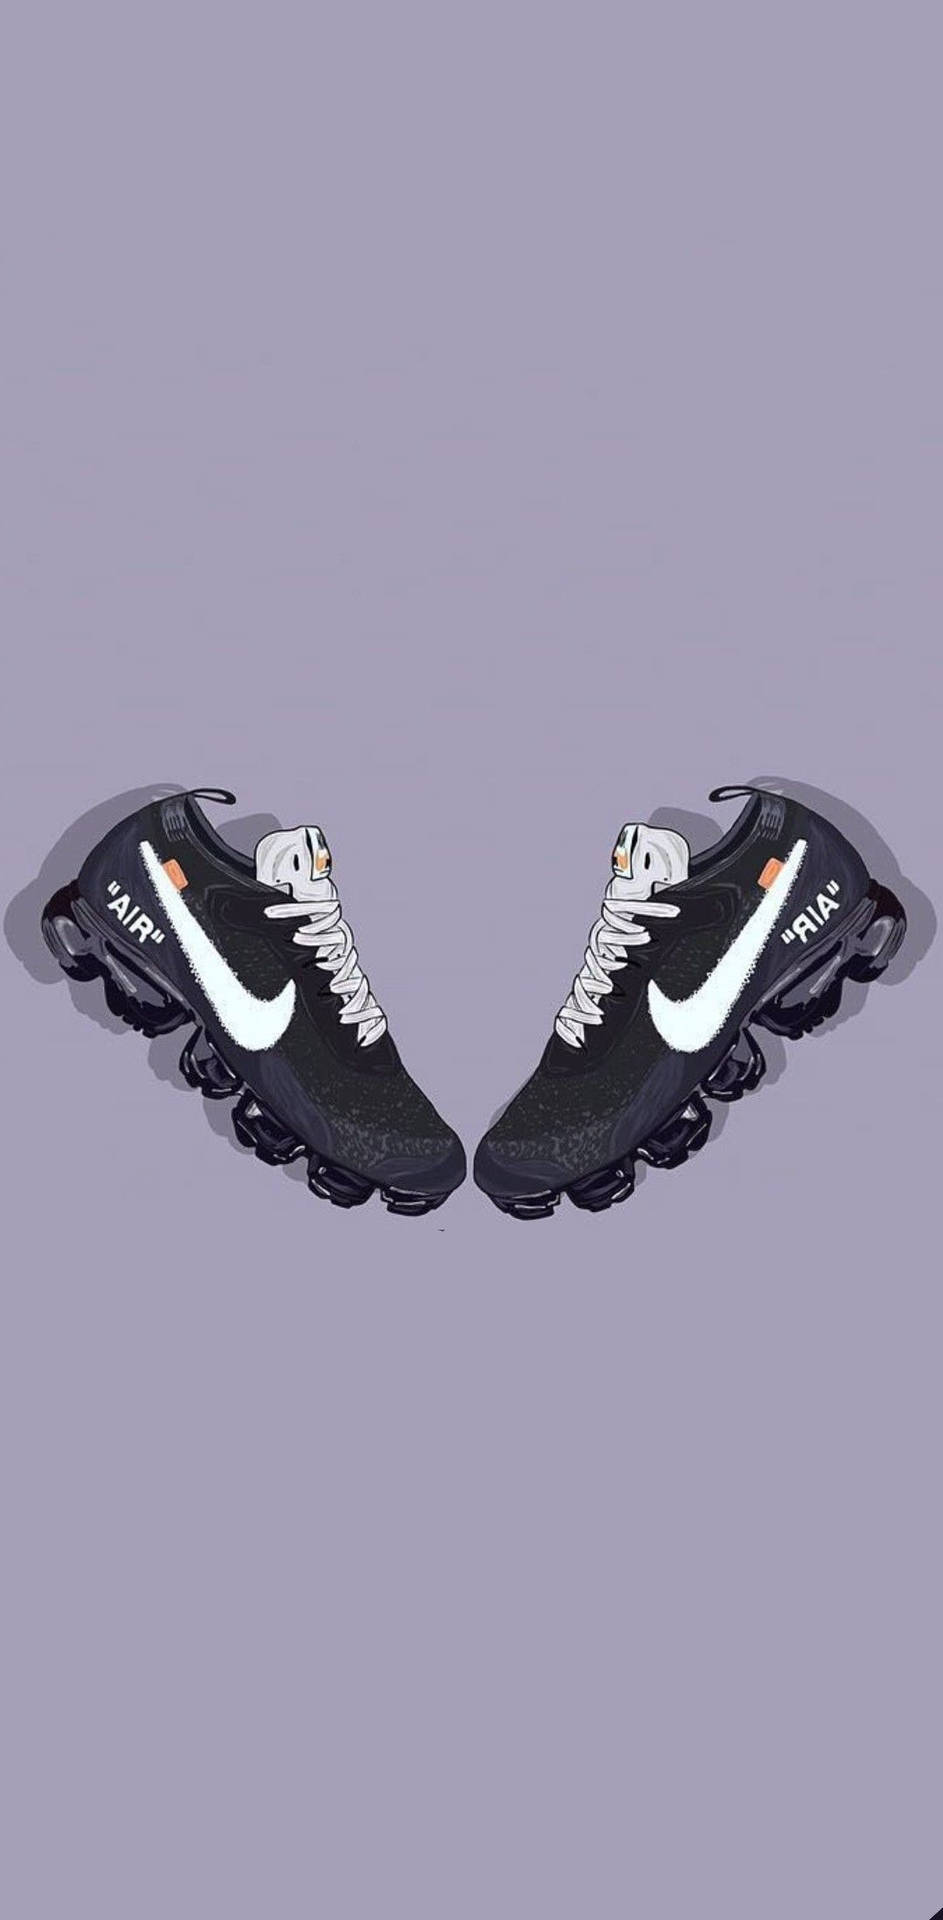 Sneaker Off-white Nike Vapormax